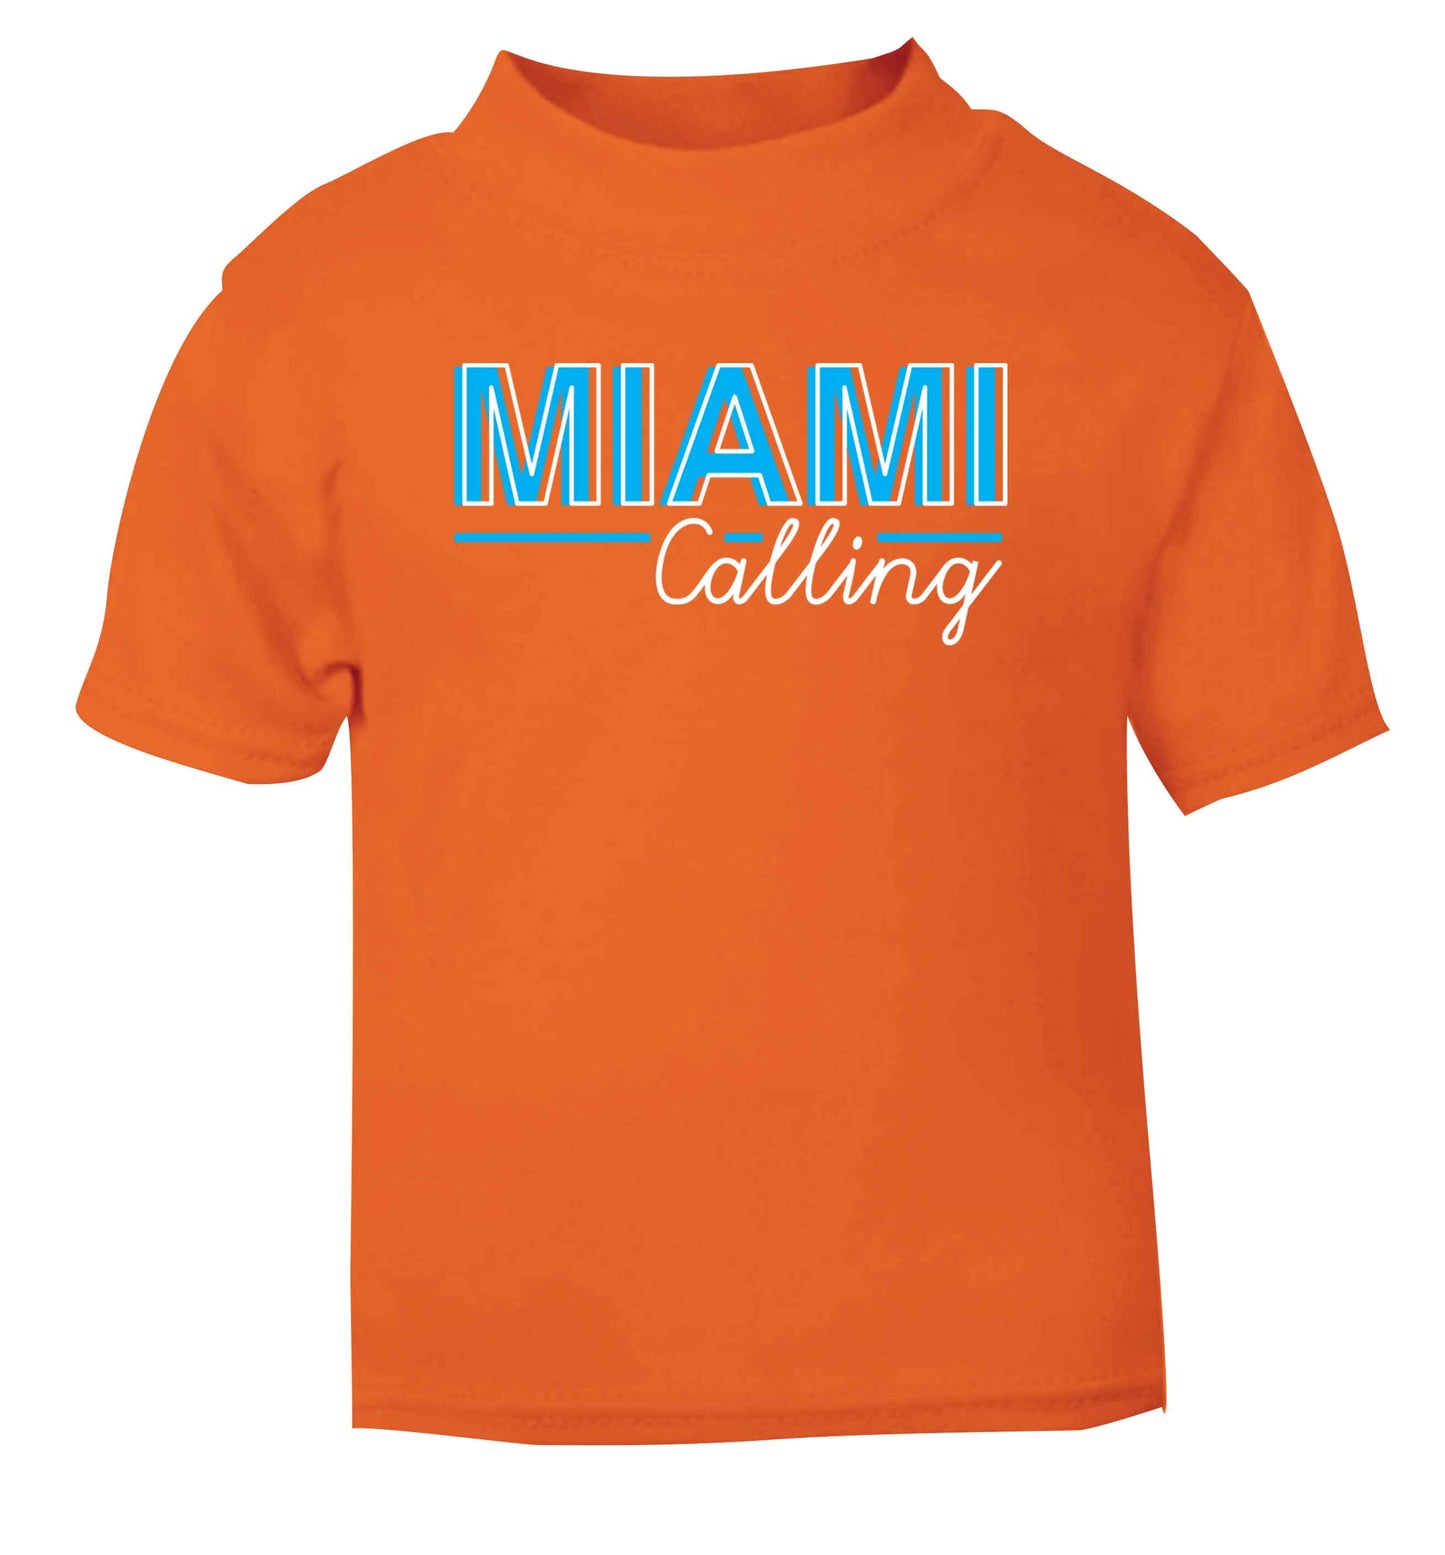 Miami calling orange Baby Toddler Tshirt 2 Years